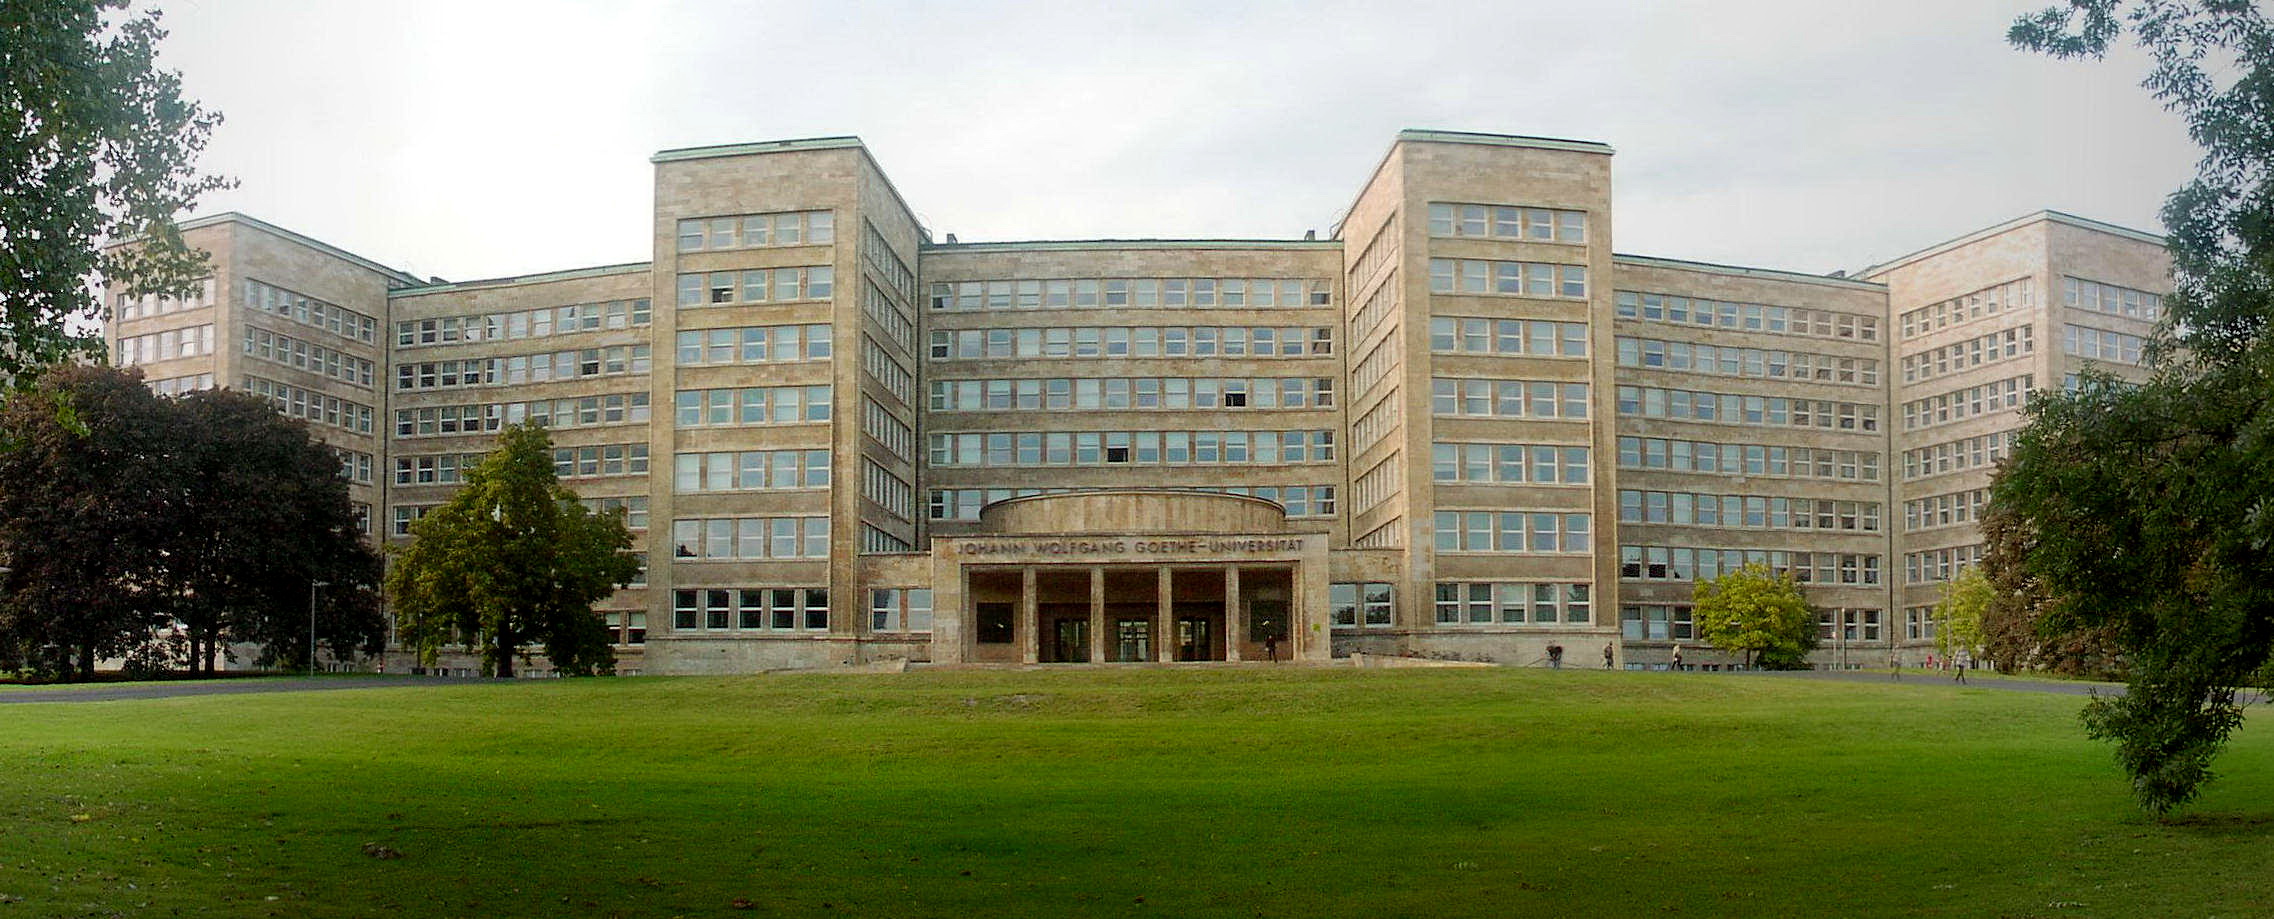 Goethe_University_Frankfurt_Poelzig_Building